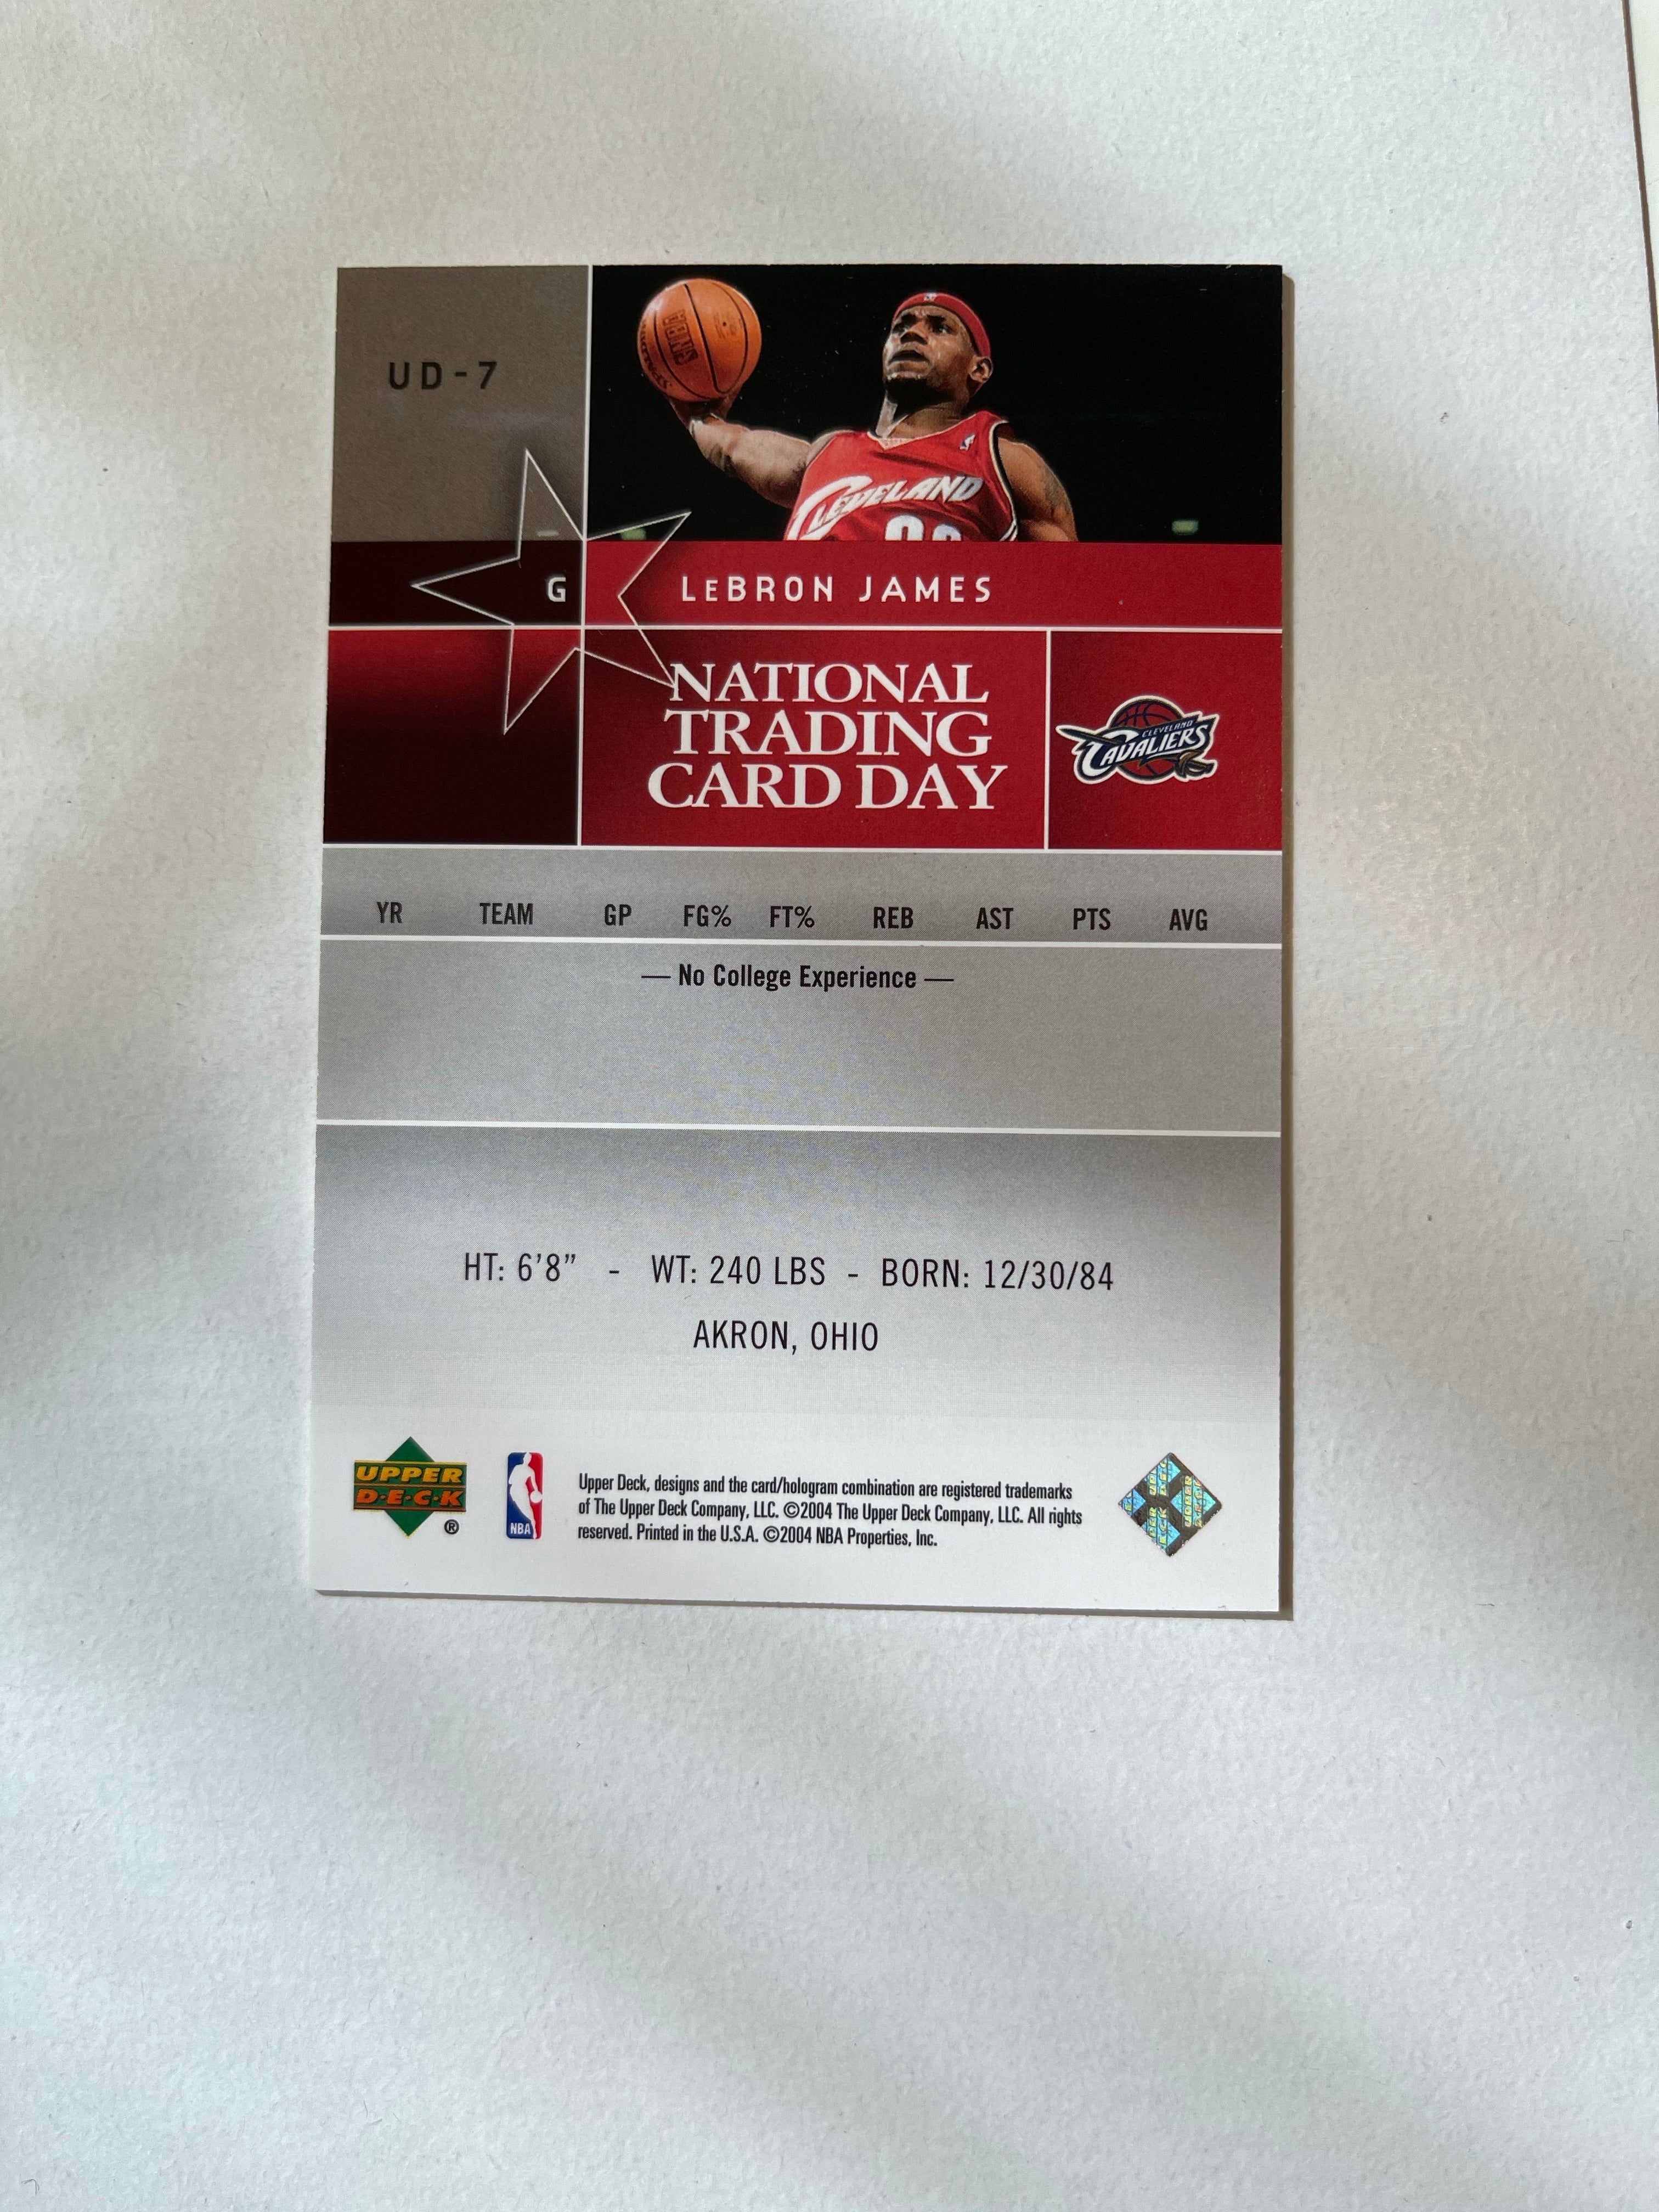 2004 LeBron James rookie National card day rare basketball card